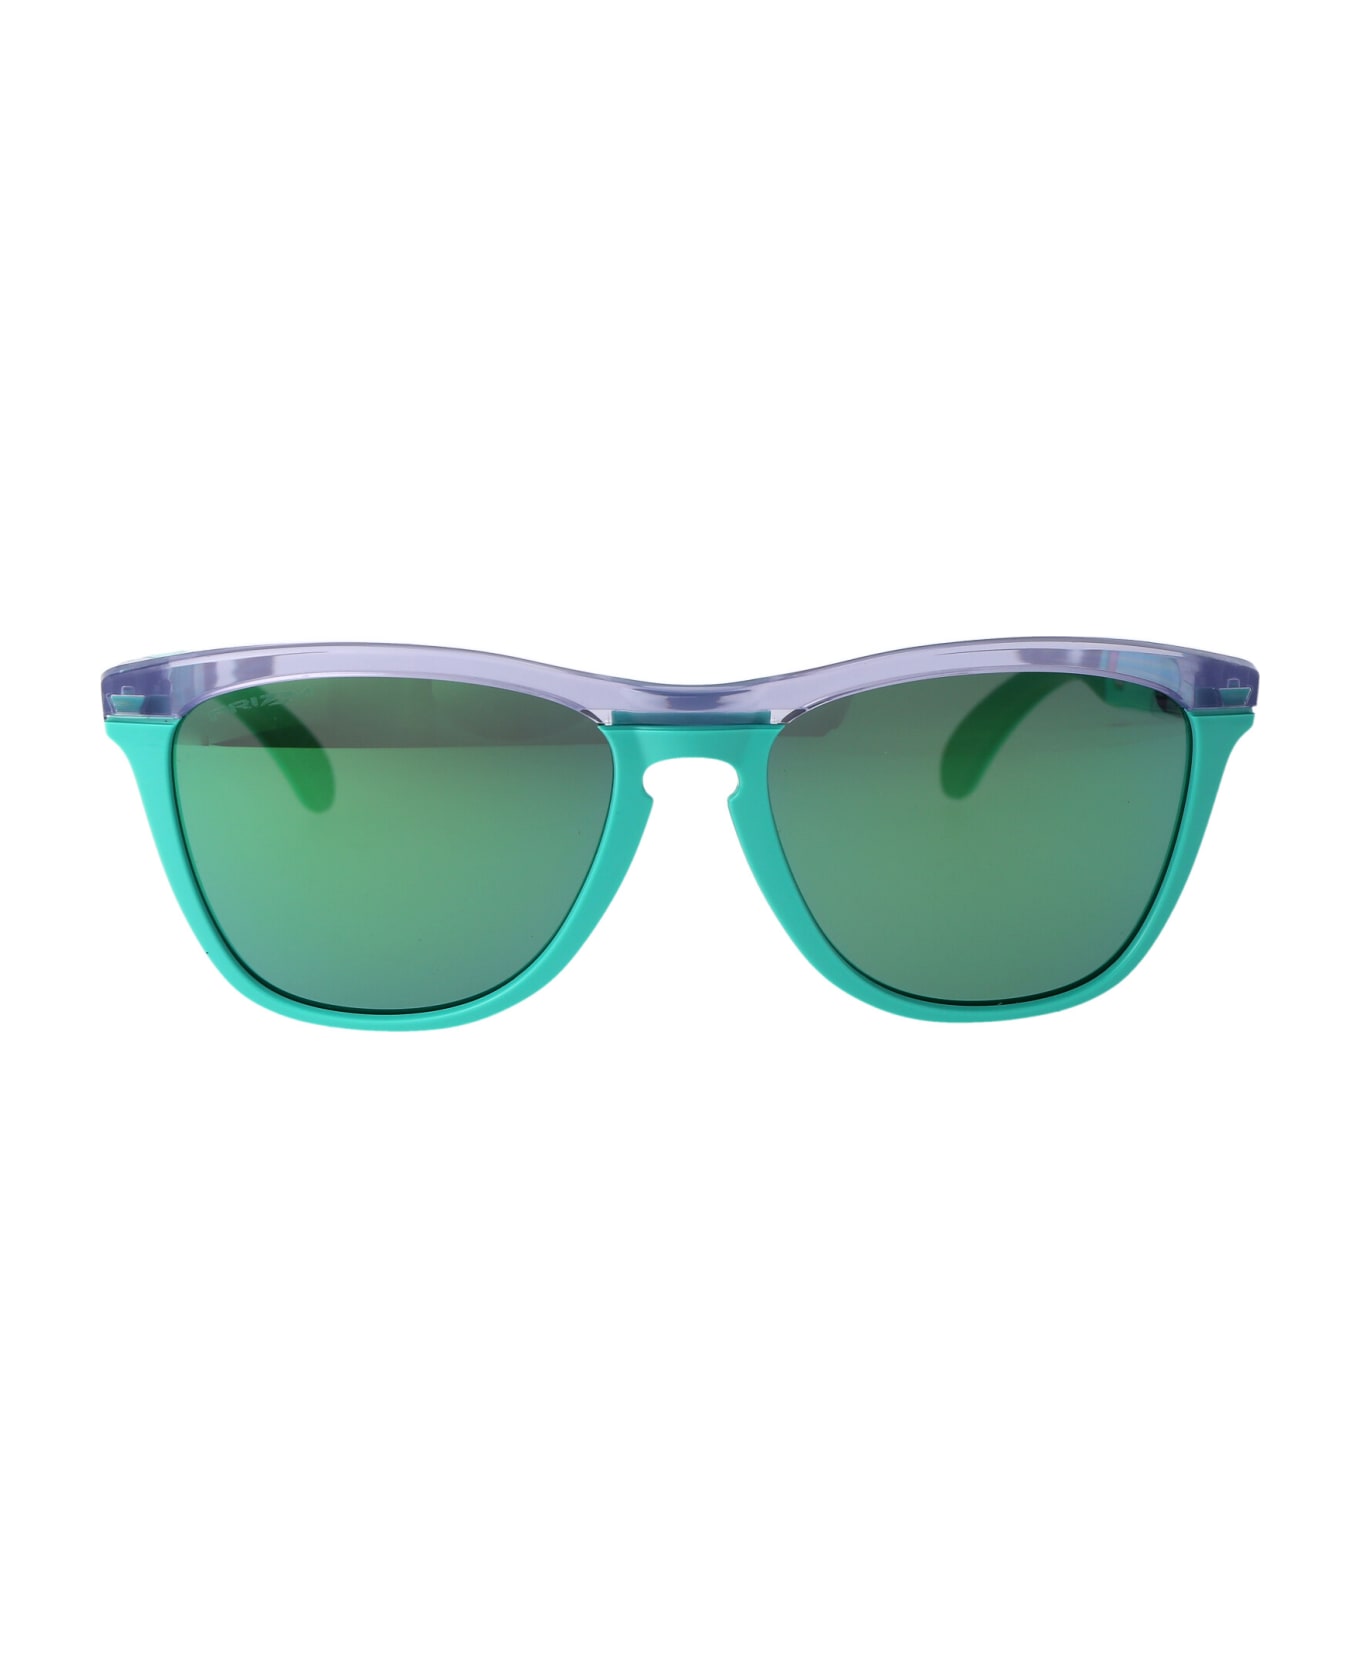 Oakley Frogskins Range Sunglasses - Turquoise